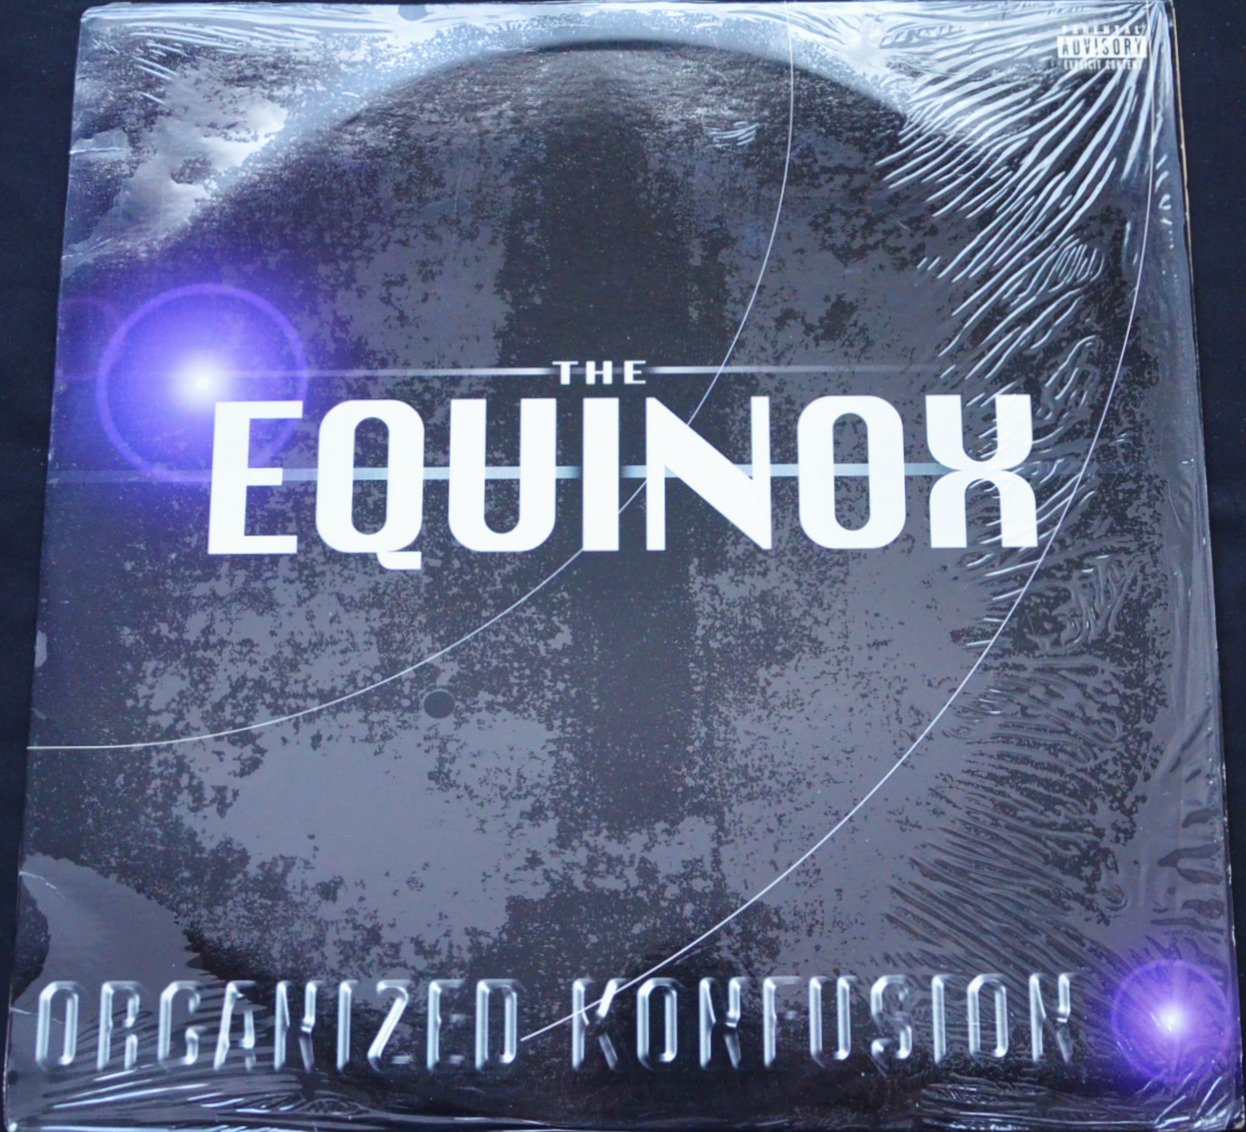 Organized Konfusion - The Equinox (シールド)underground